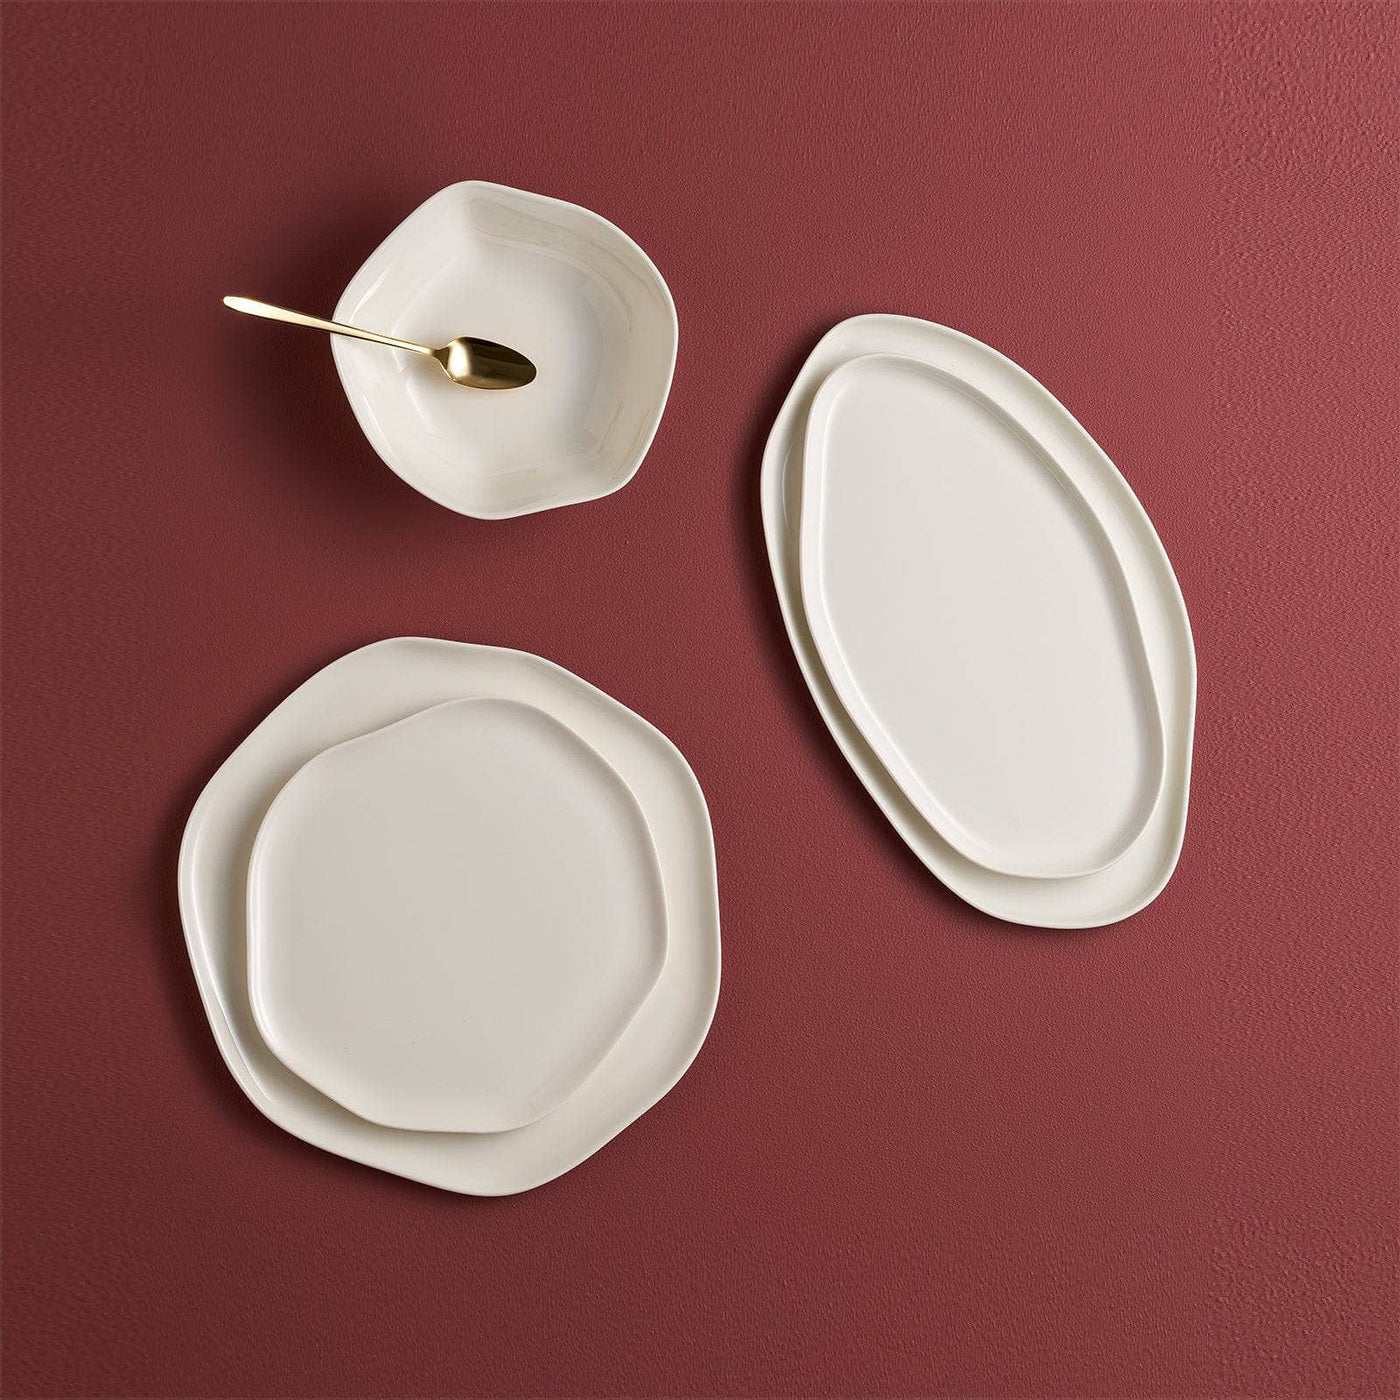 Alumilite Set of 6 Flat Plates, Creme, 33 cm Plates sazy.com